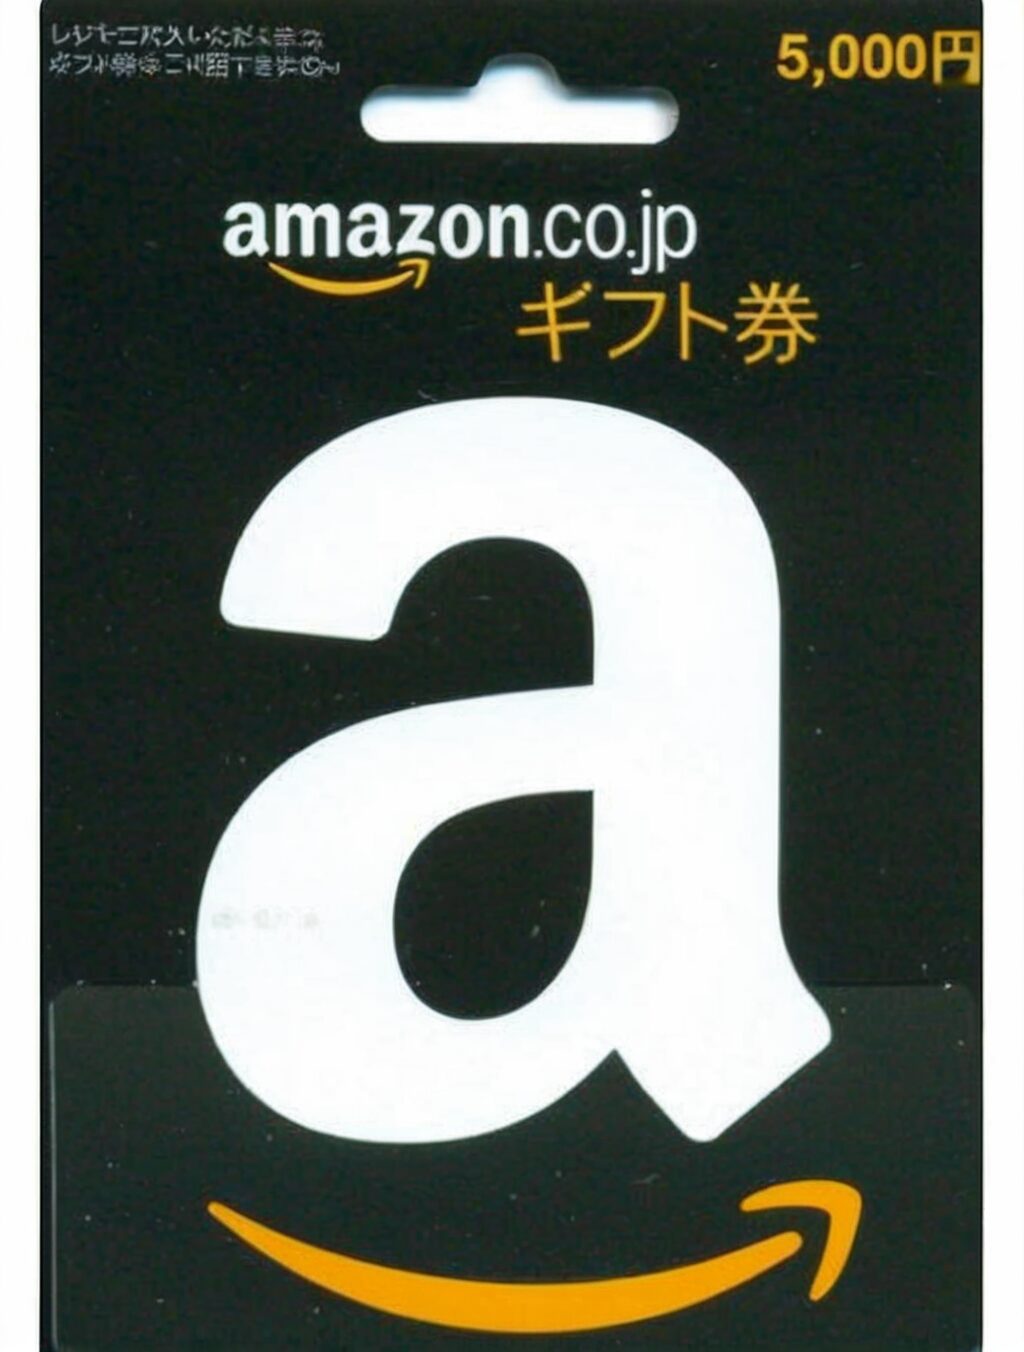 amazon japan gift card code